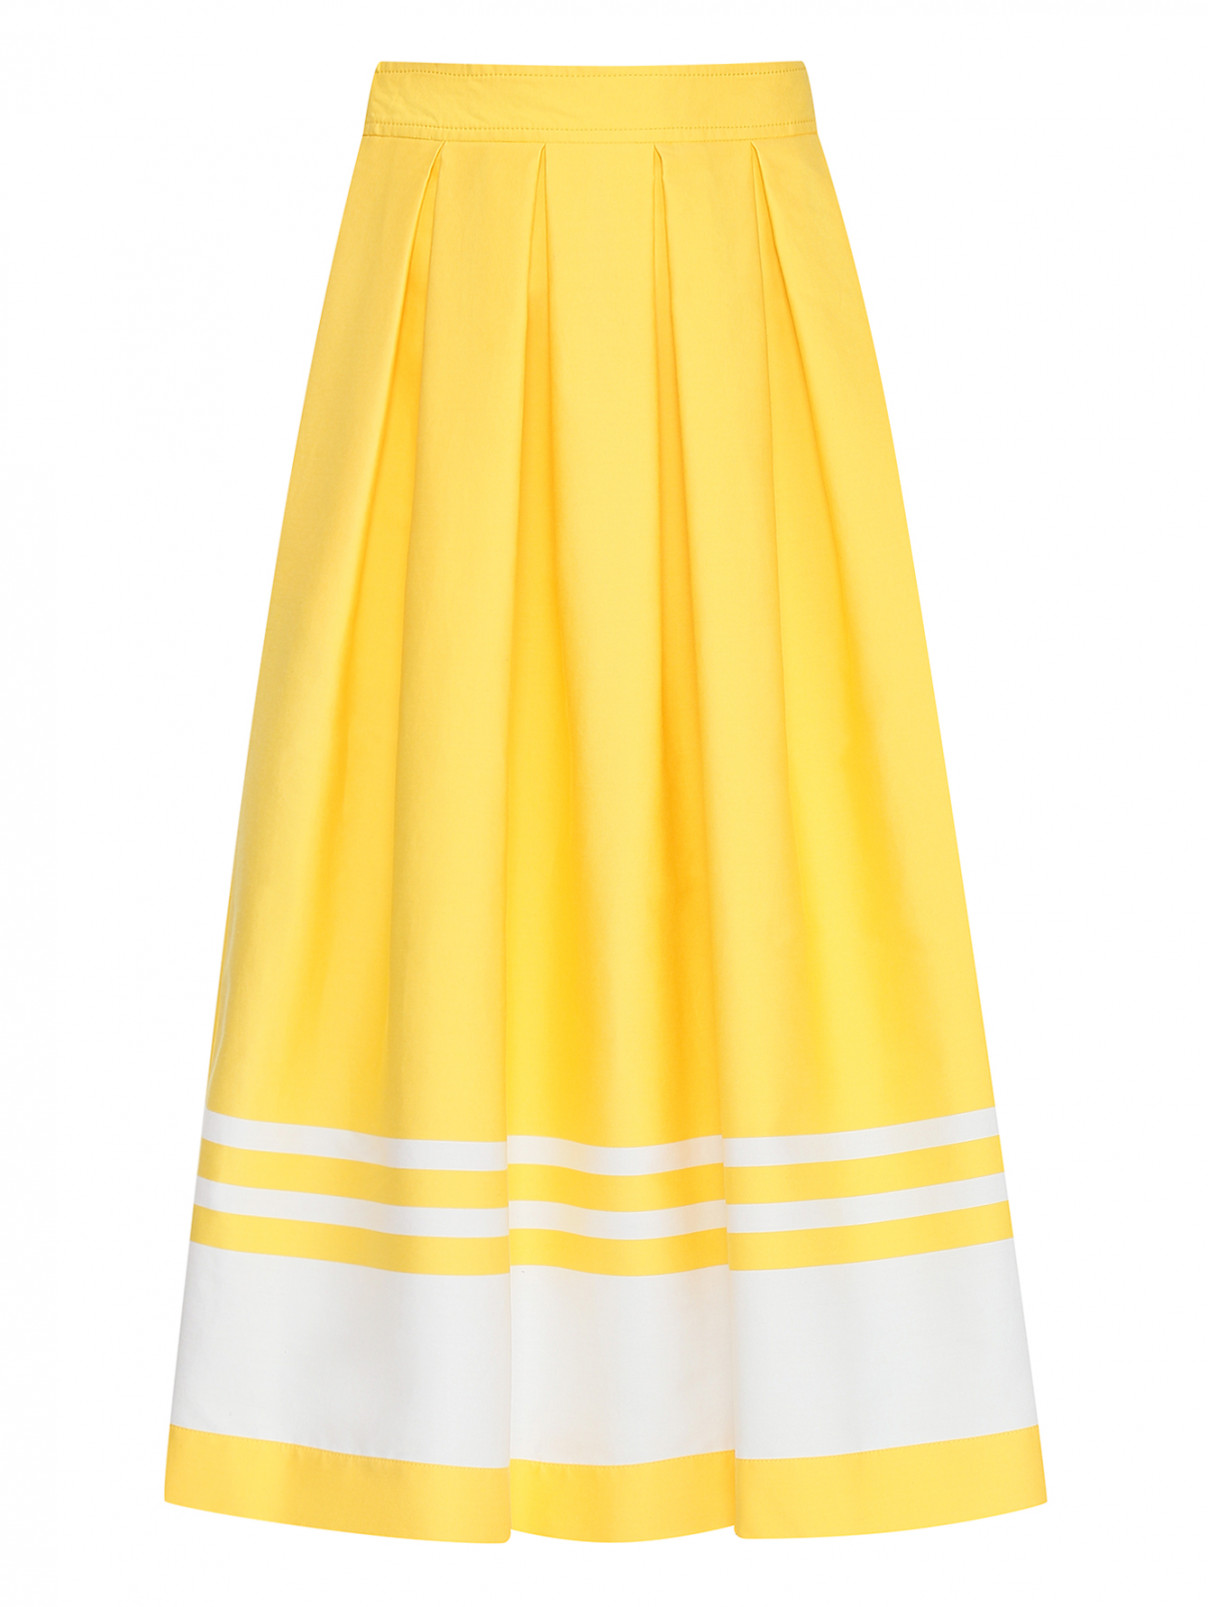 Юбка из хлопка с узором Moschino Boutique  –  Общий вид  – Цвет:  Желтый